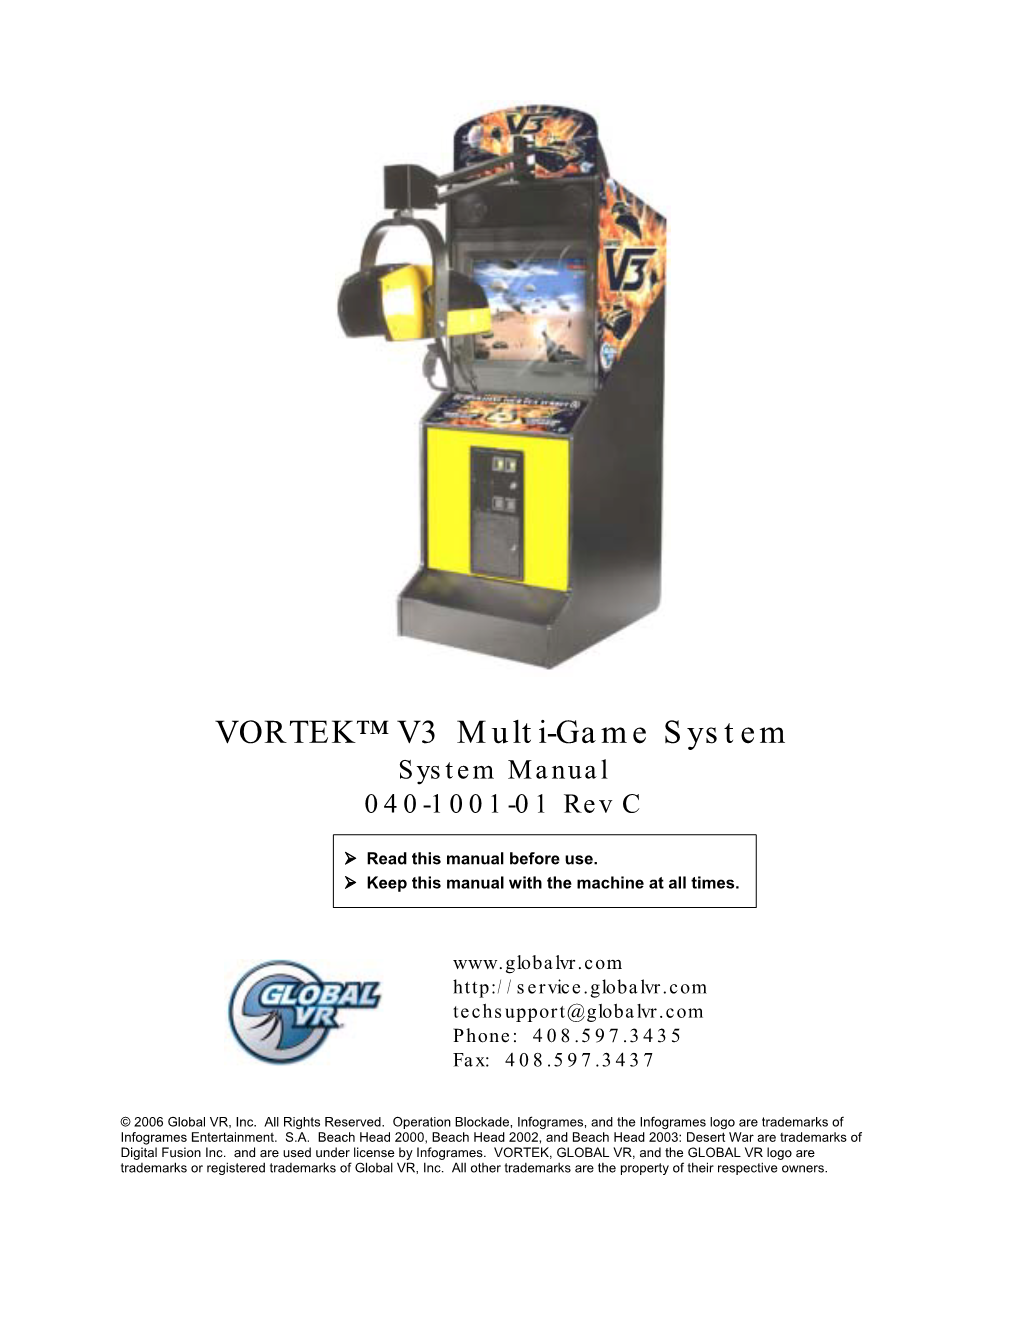 VORTEK™ V3 Multi-Game System System Manual 040-1001-01 Rev C